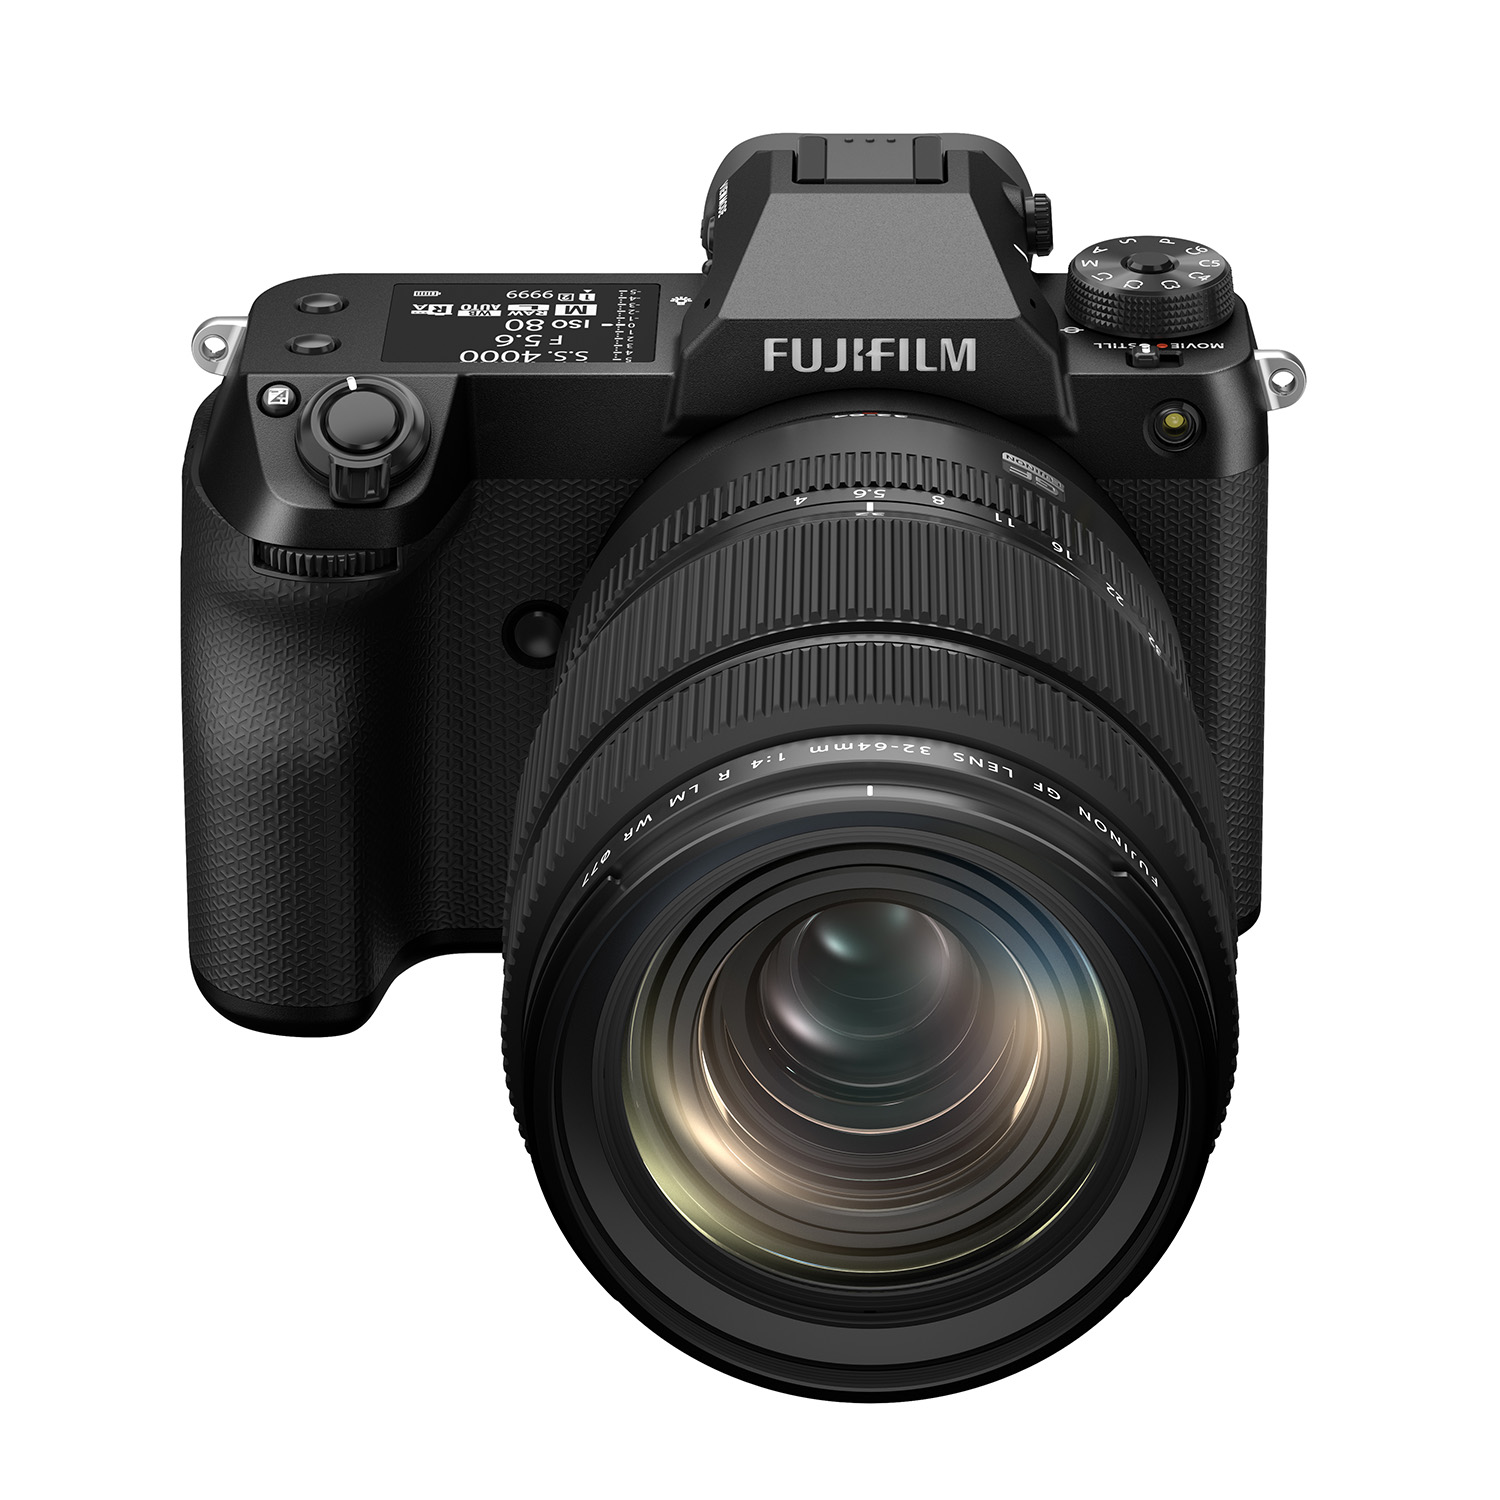 Снимок камеры Fujifilm GFX100S II на белом фоне, вид спереди